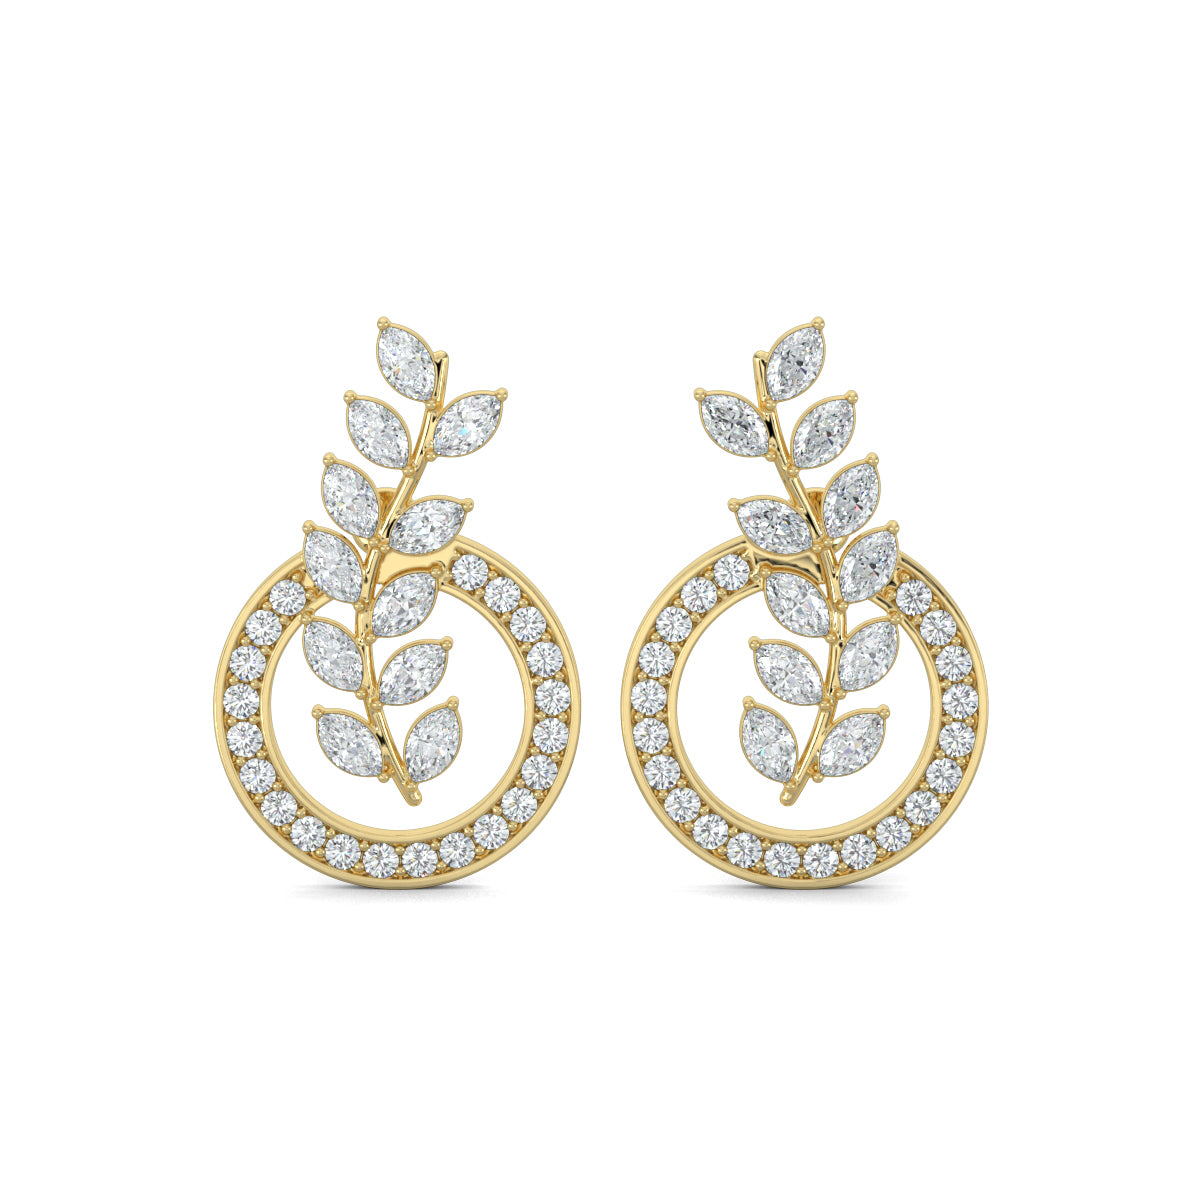 Yellow Gold, Diamond Earrings, Natural diamond earrings, Lab-grown diamond earrings, Marquise Vine Earrings, Nature-inspired earrings, Vine-like design, Ethical diamonds, Elegance, Sparkling jewelry